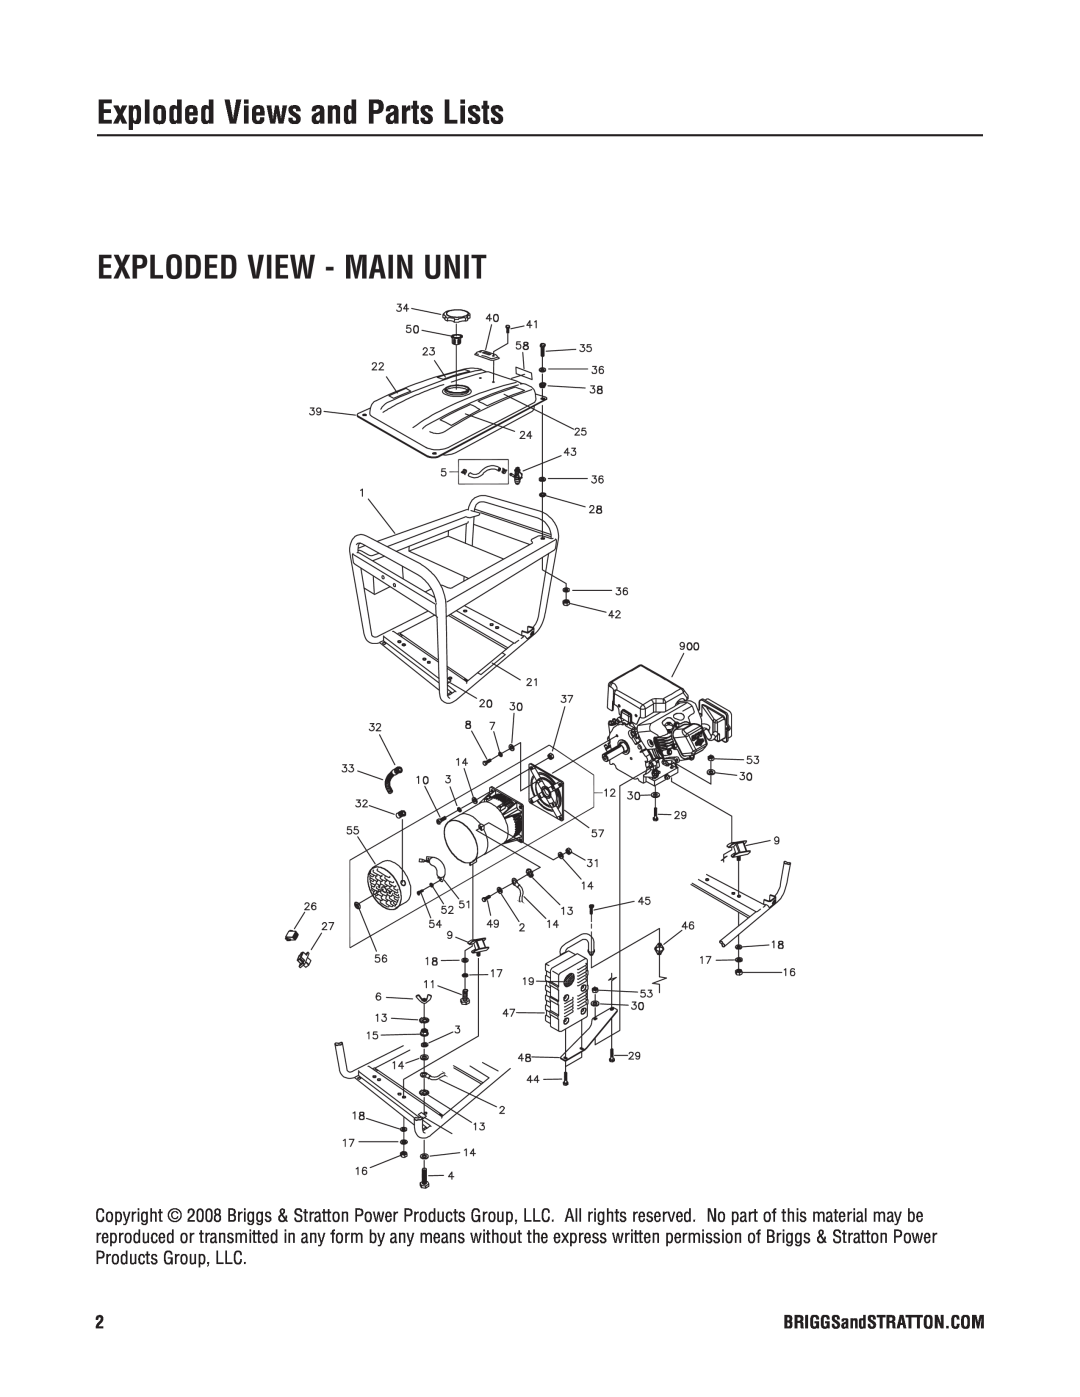 Briggs & Stratton 30372 manual Exploded Views and Parts Lists, Exploded View - Main Unit, BRIGGSandSTRATTON.COM 